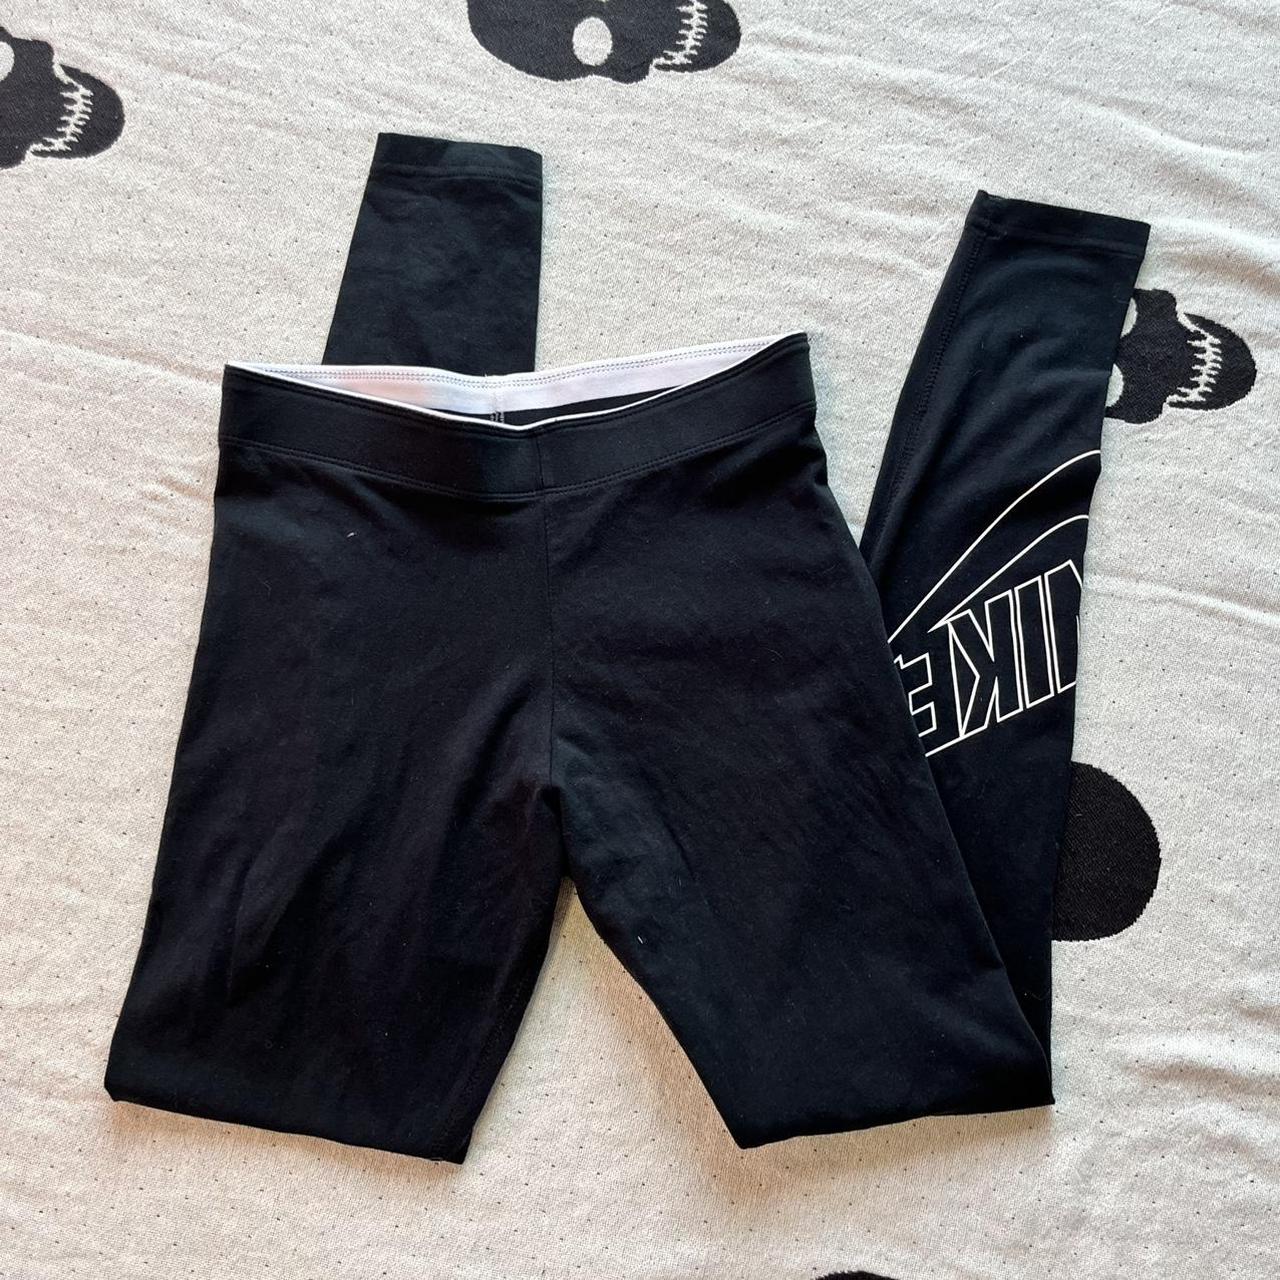 Nike cotton leggings 🎱🫧 Size small in junior, so - Depop